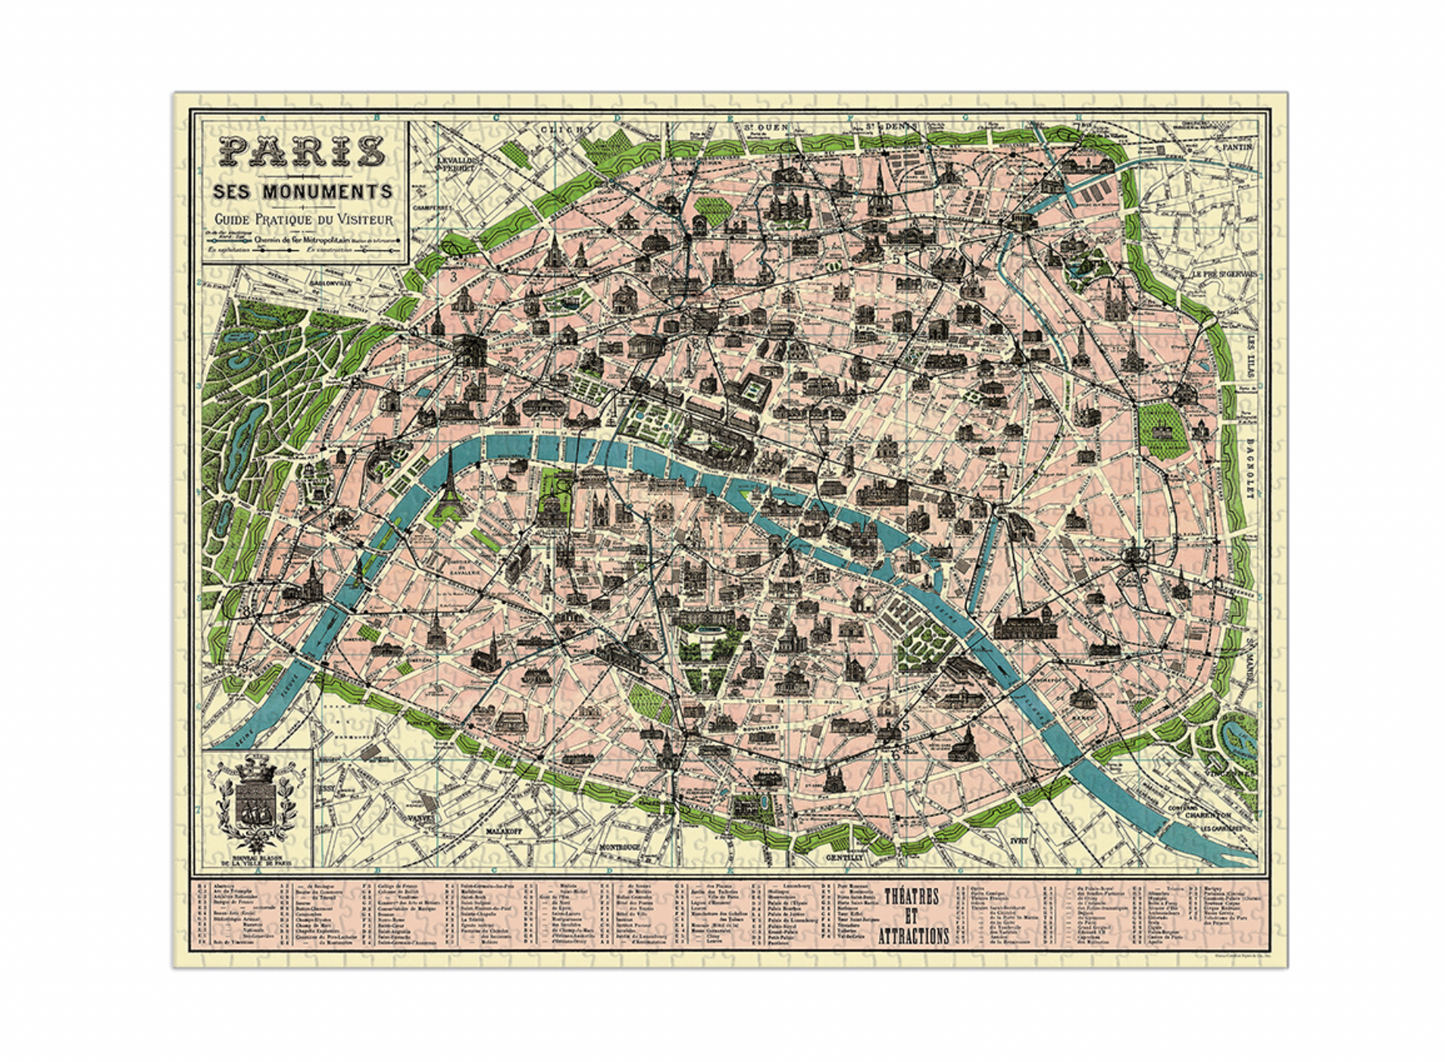 Paris Map Puzzle